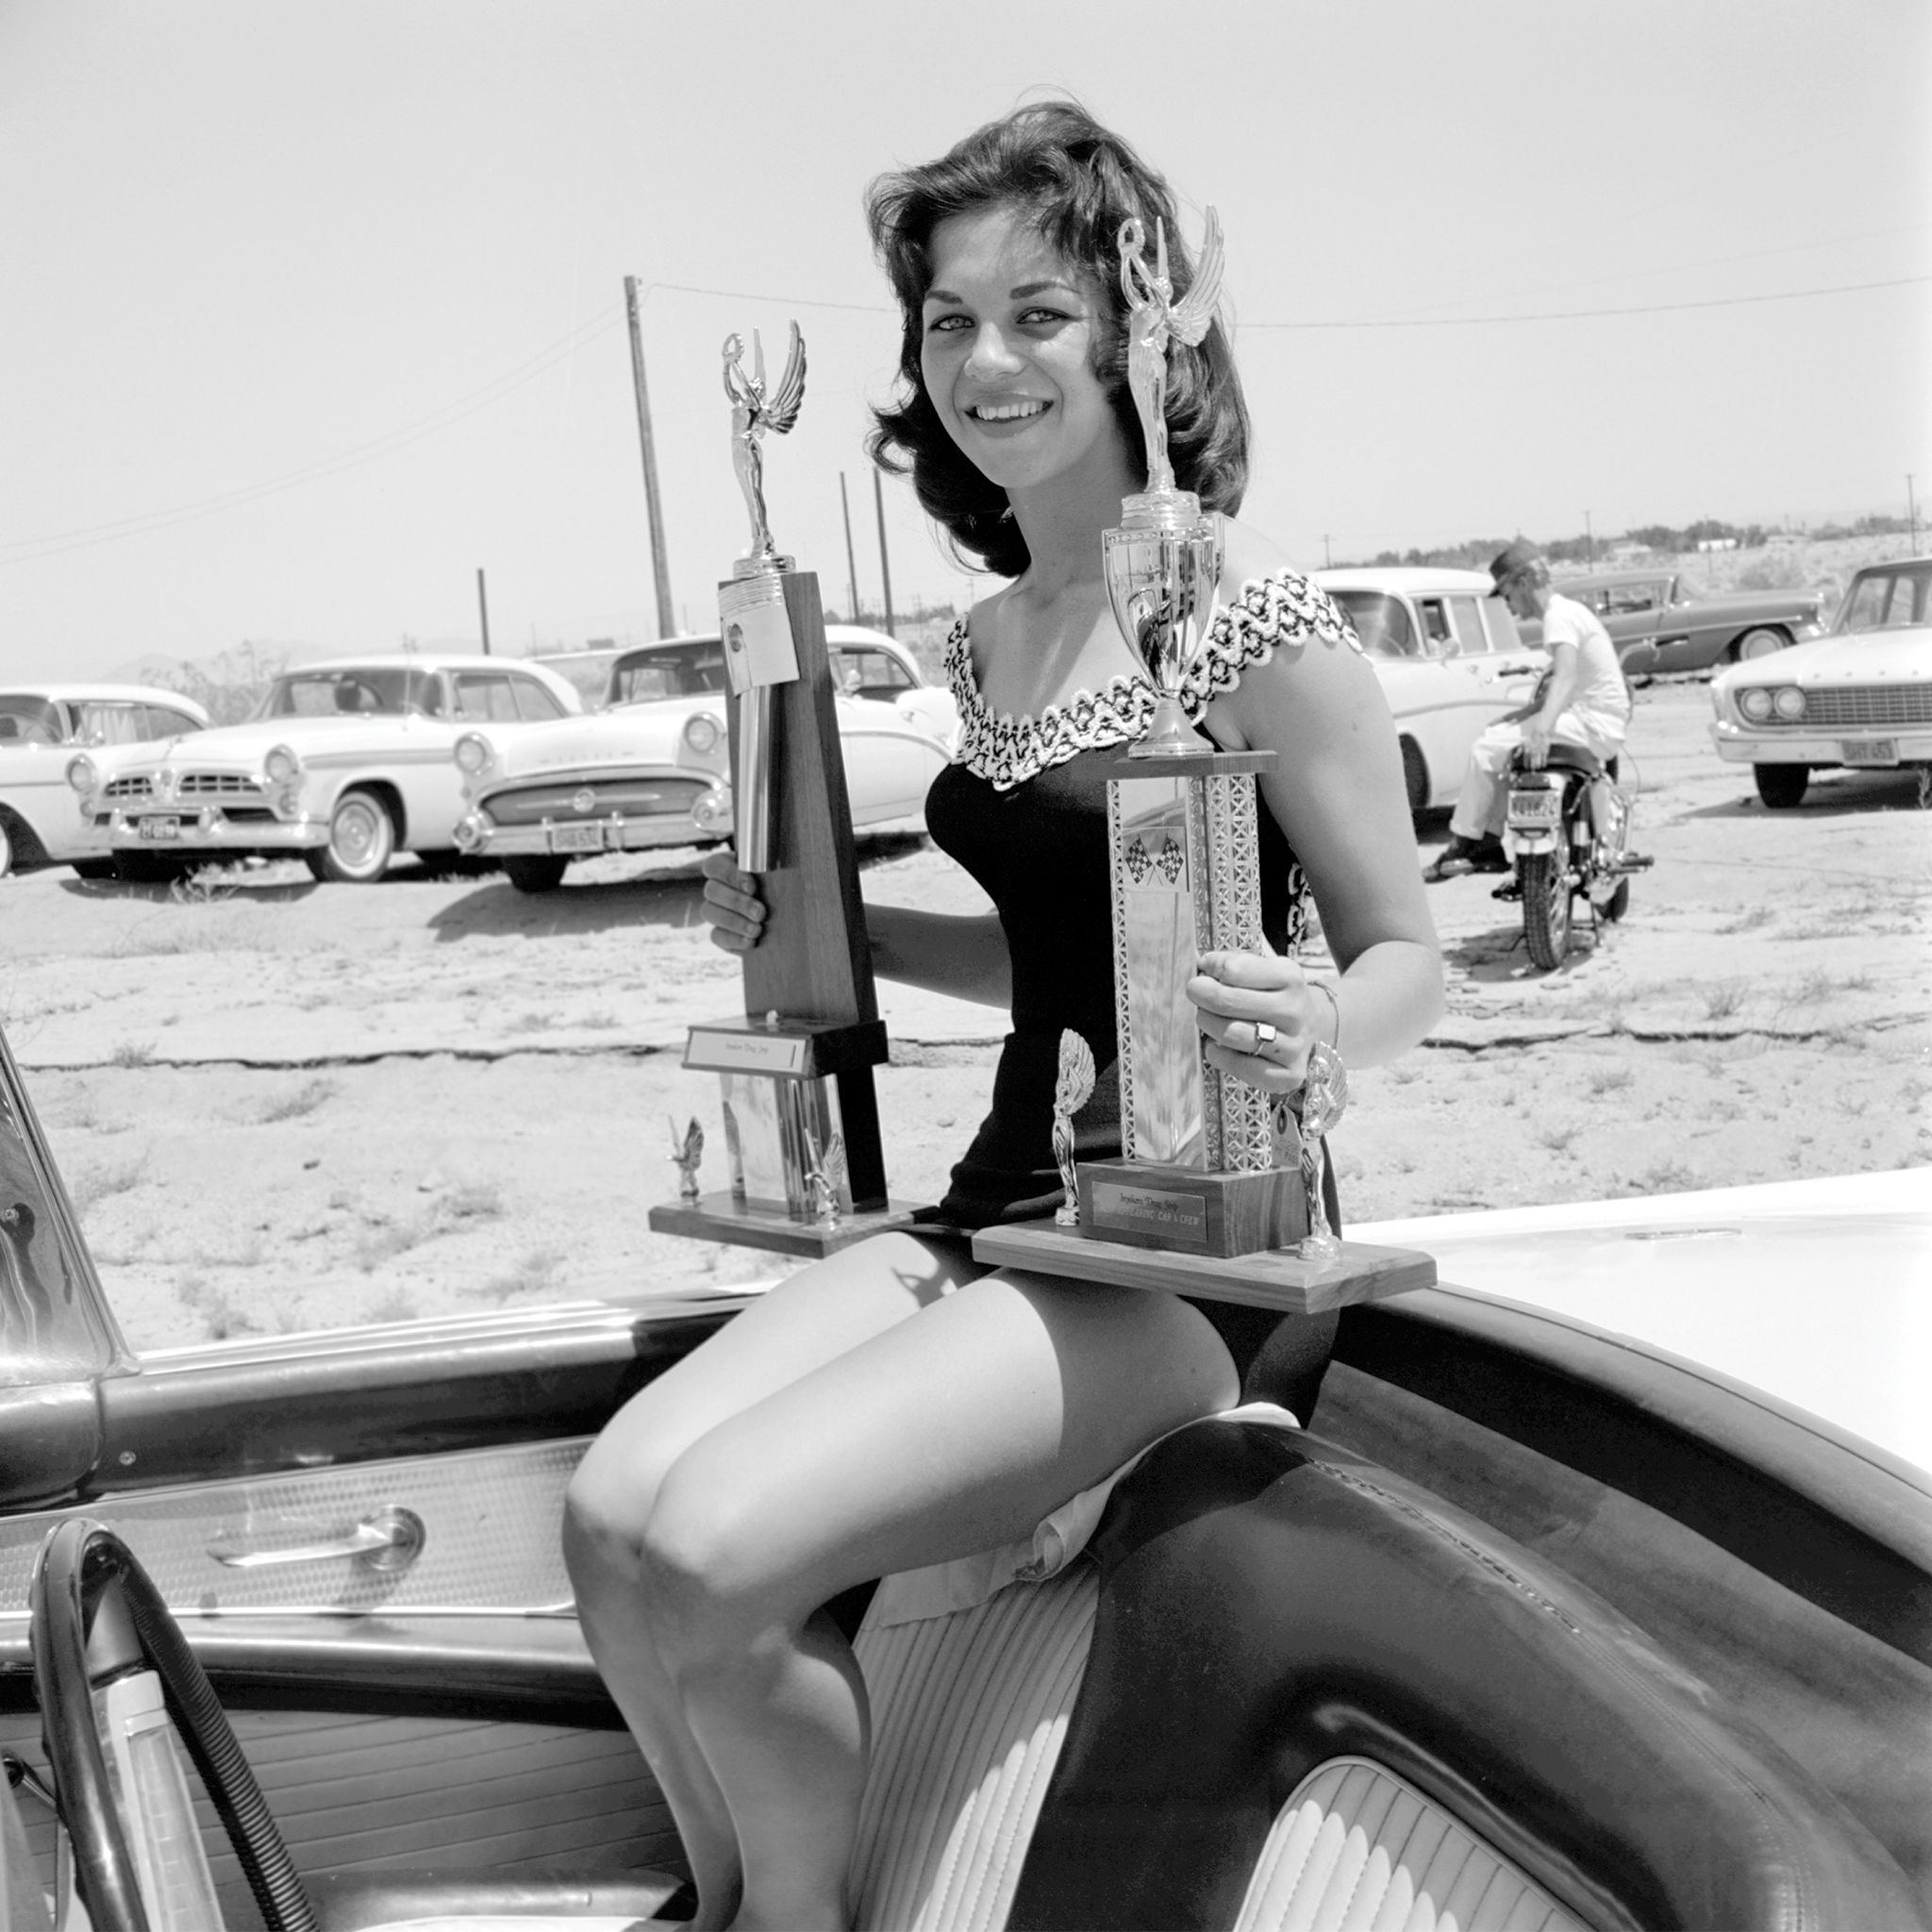 trophy-girl-1961-dust-devils-inyokern-drag-strip-1-jpg.2789803